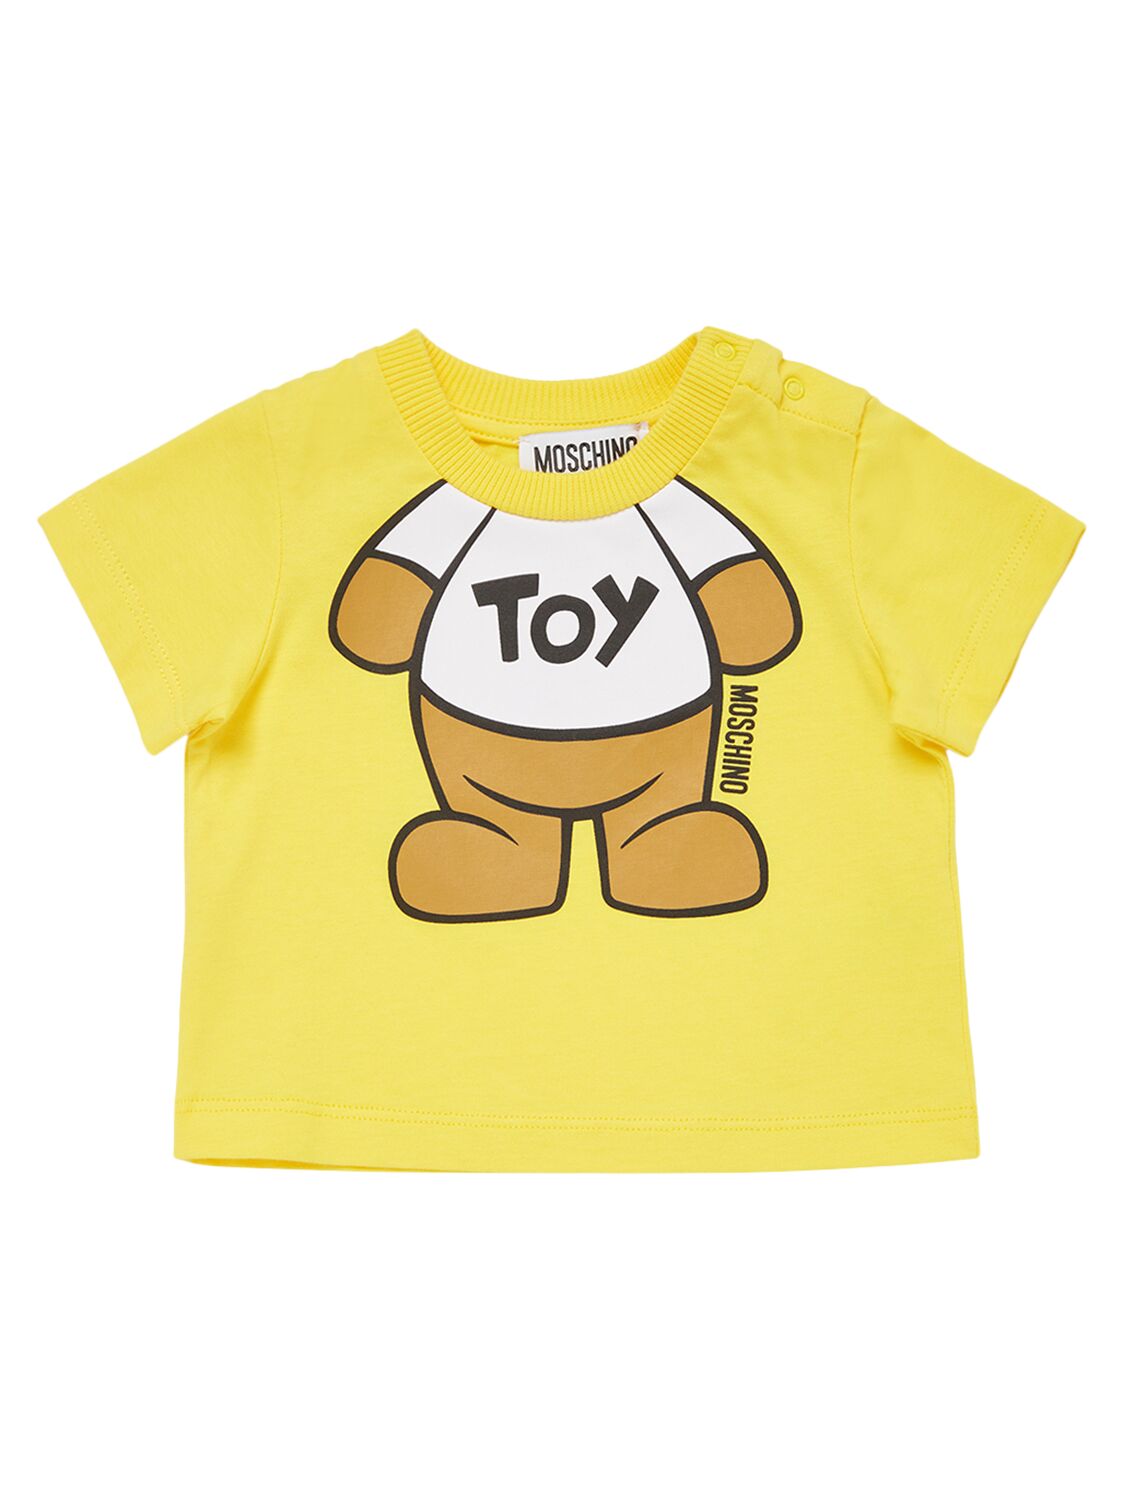 Moschino Babies' Cotton Jersey T-shirt In Yellow